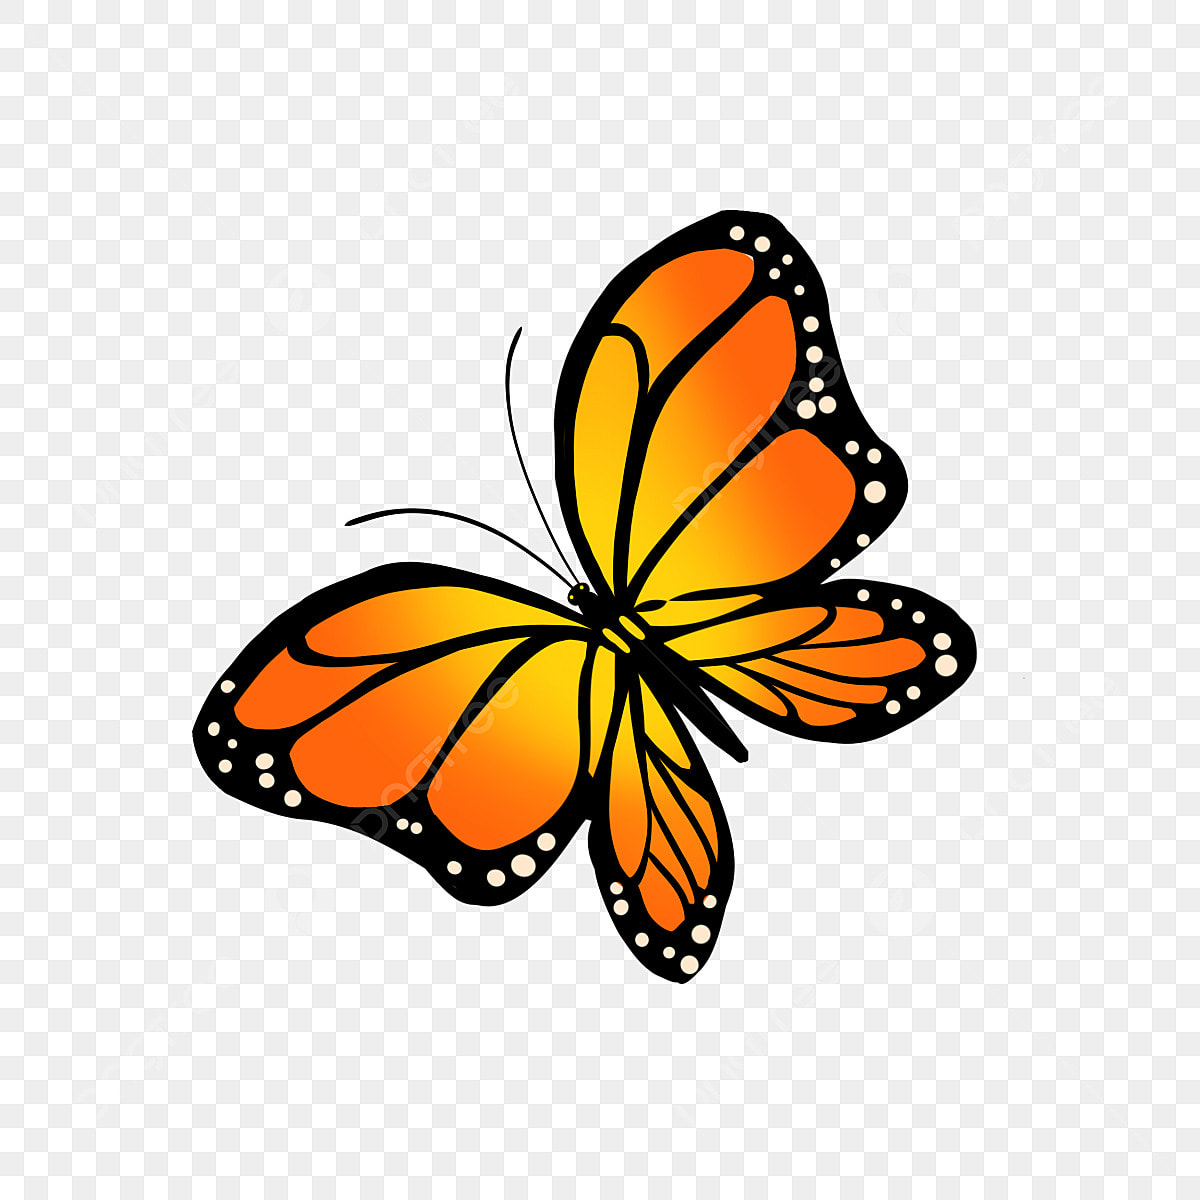 Blue Monarch Butterfly Clipart Transparent Background, Orange Cartoon Style Monarch Butterfly Clipart, Monarch Butterfly Clip Art, Cartoon Butterfly, Monarch Butterfly PNG Image For Free Download